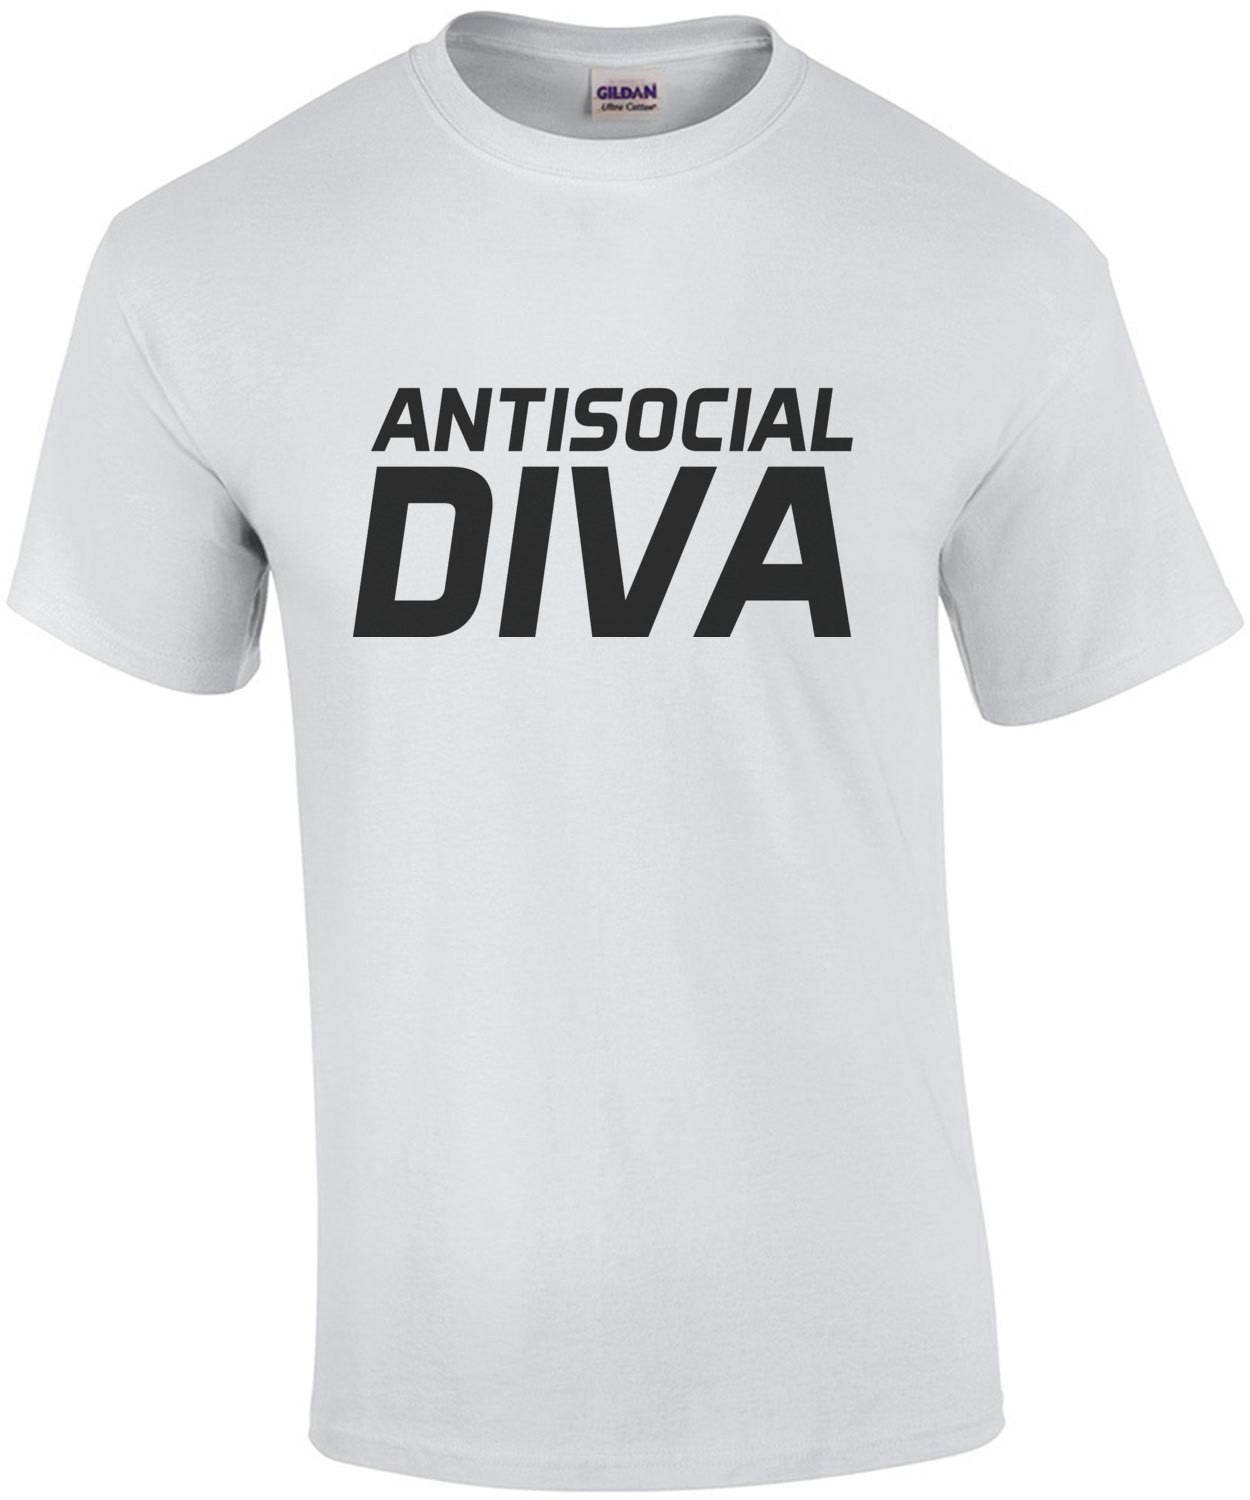 Antisocial Diva - Funny T-Shirt